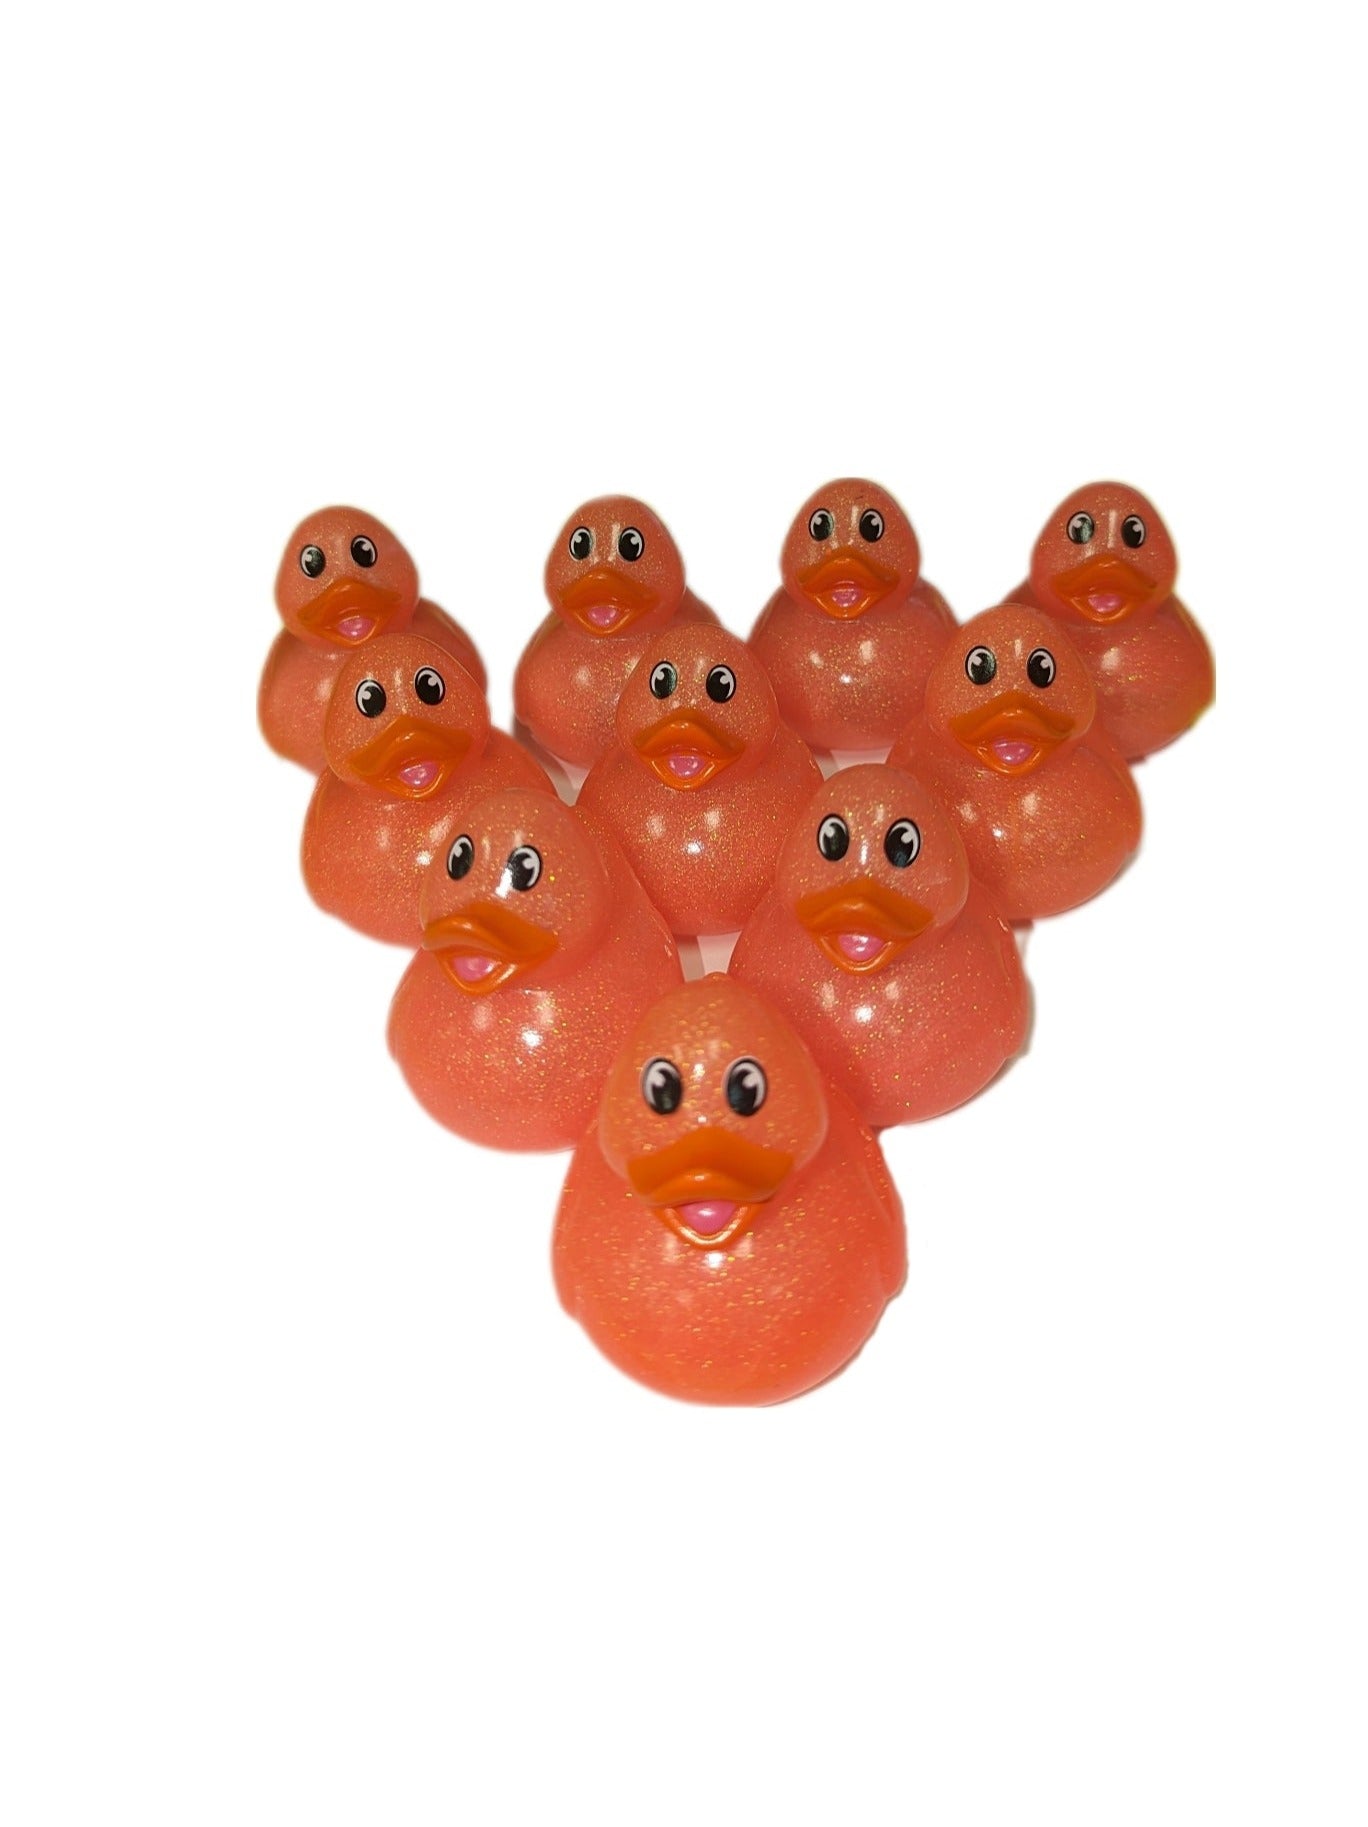 10 Pink Glitter & Orange Beak Ducks - 2" Rubber Ducks